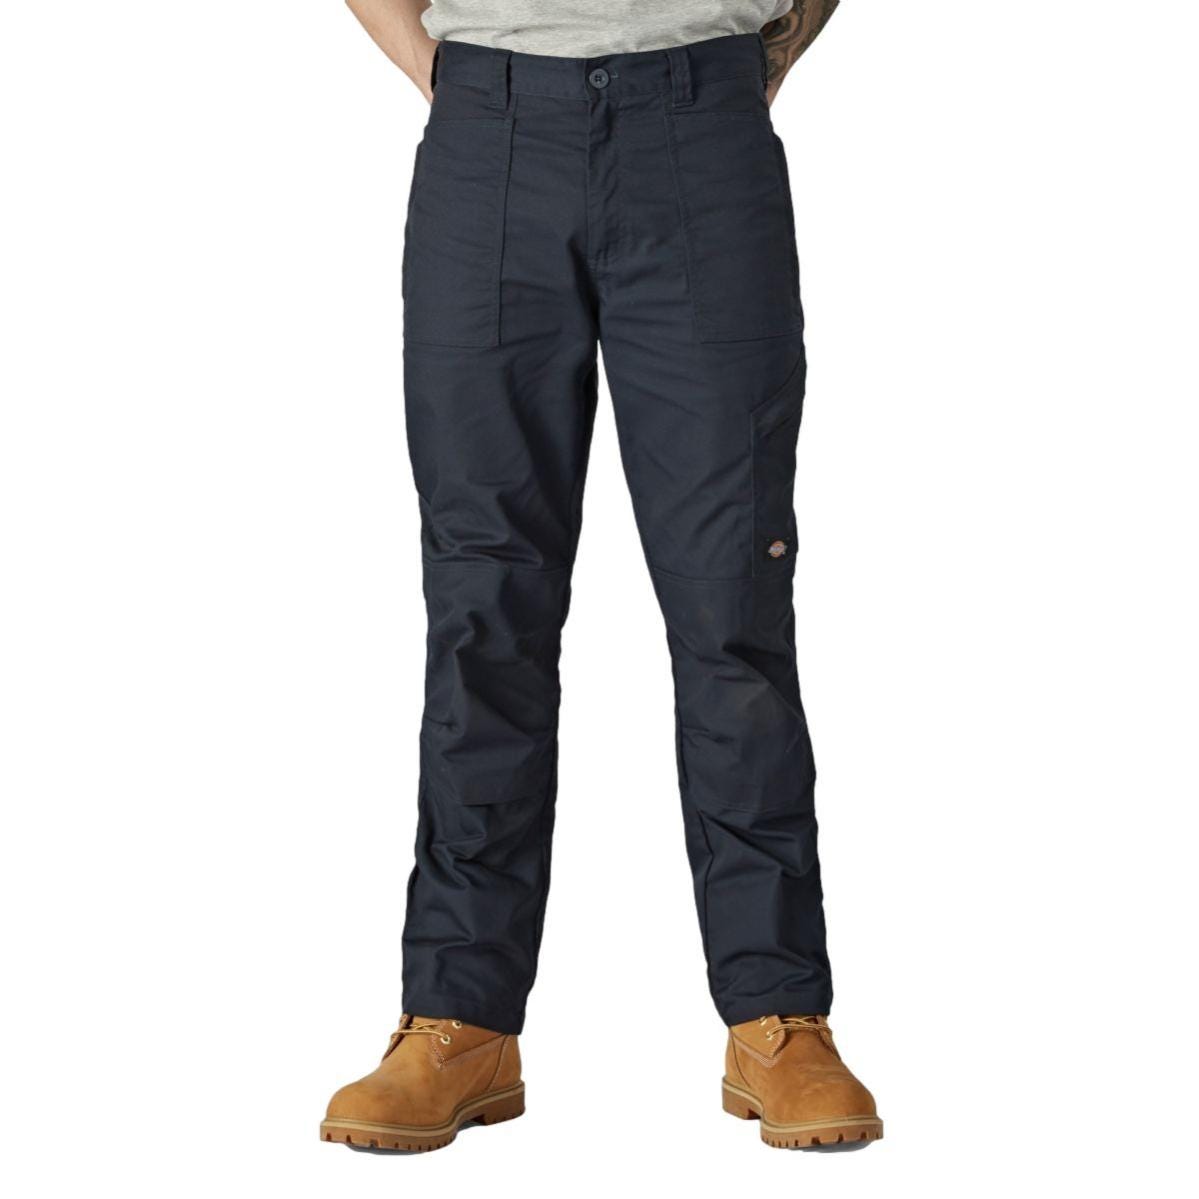 Pantalon de travail Action Flex bleu marine - Dickies - Taille 42 0